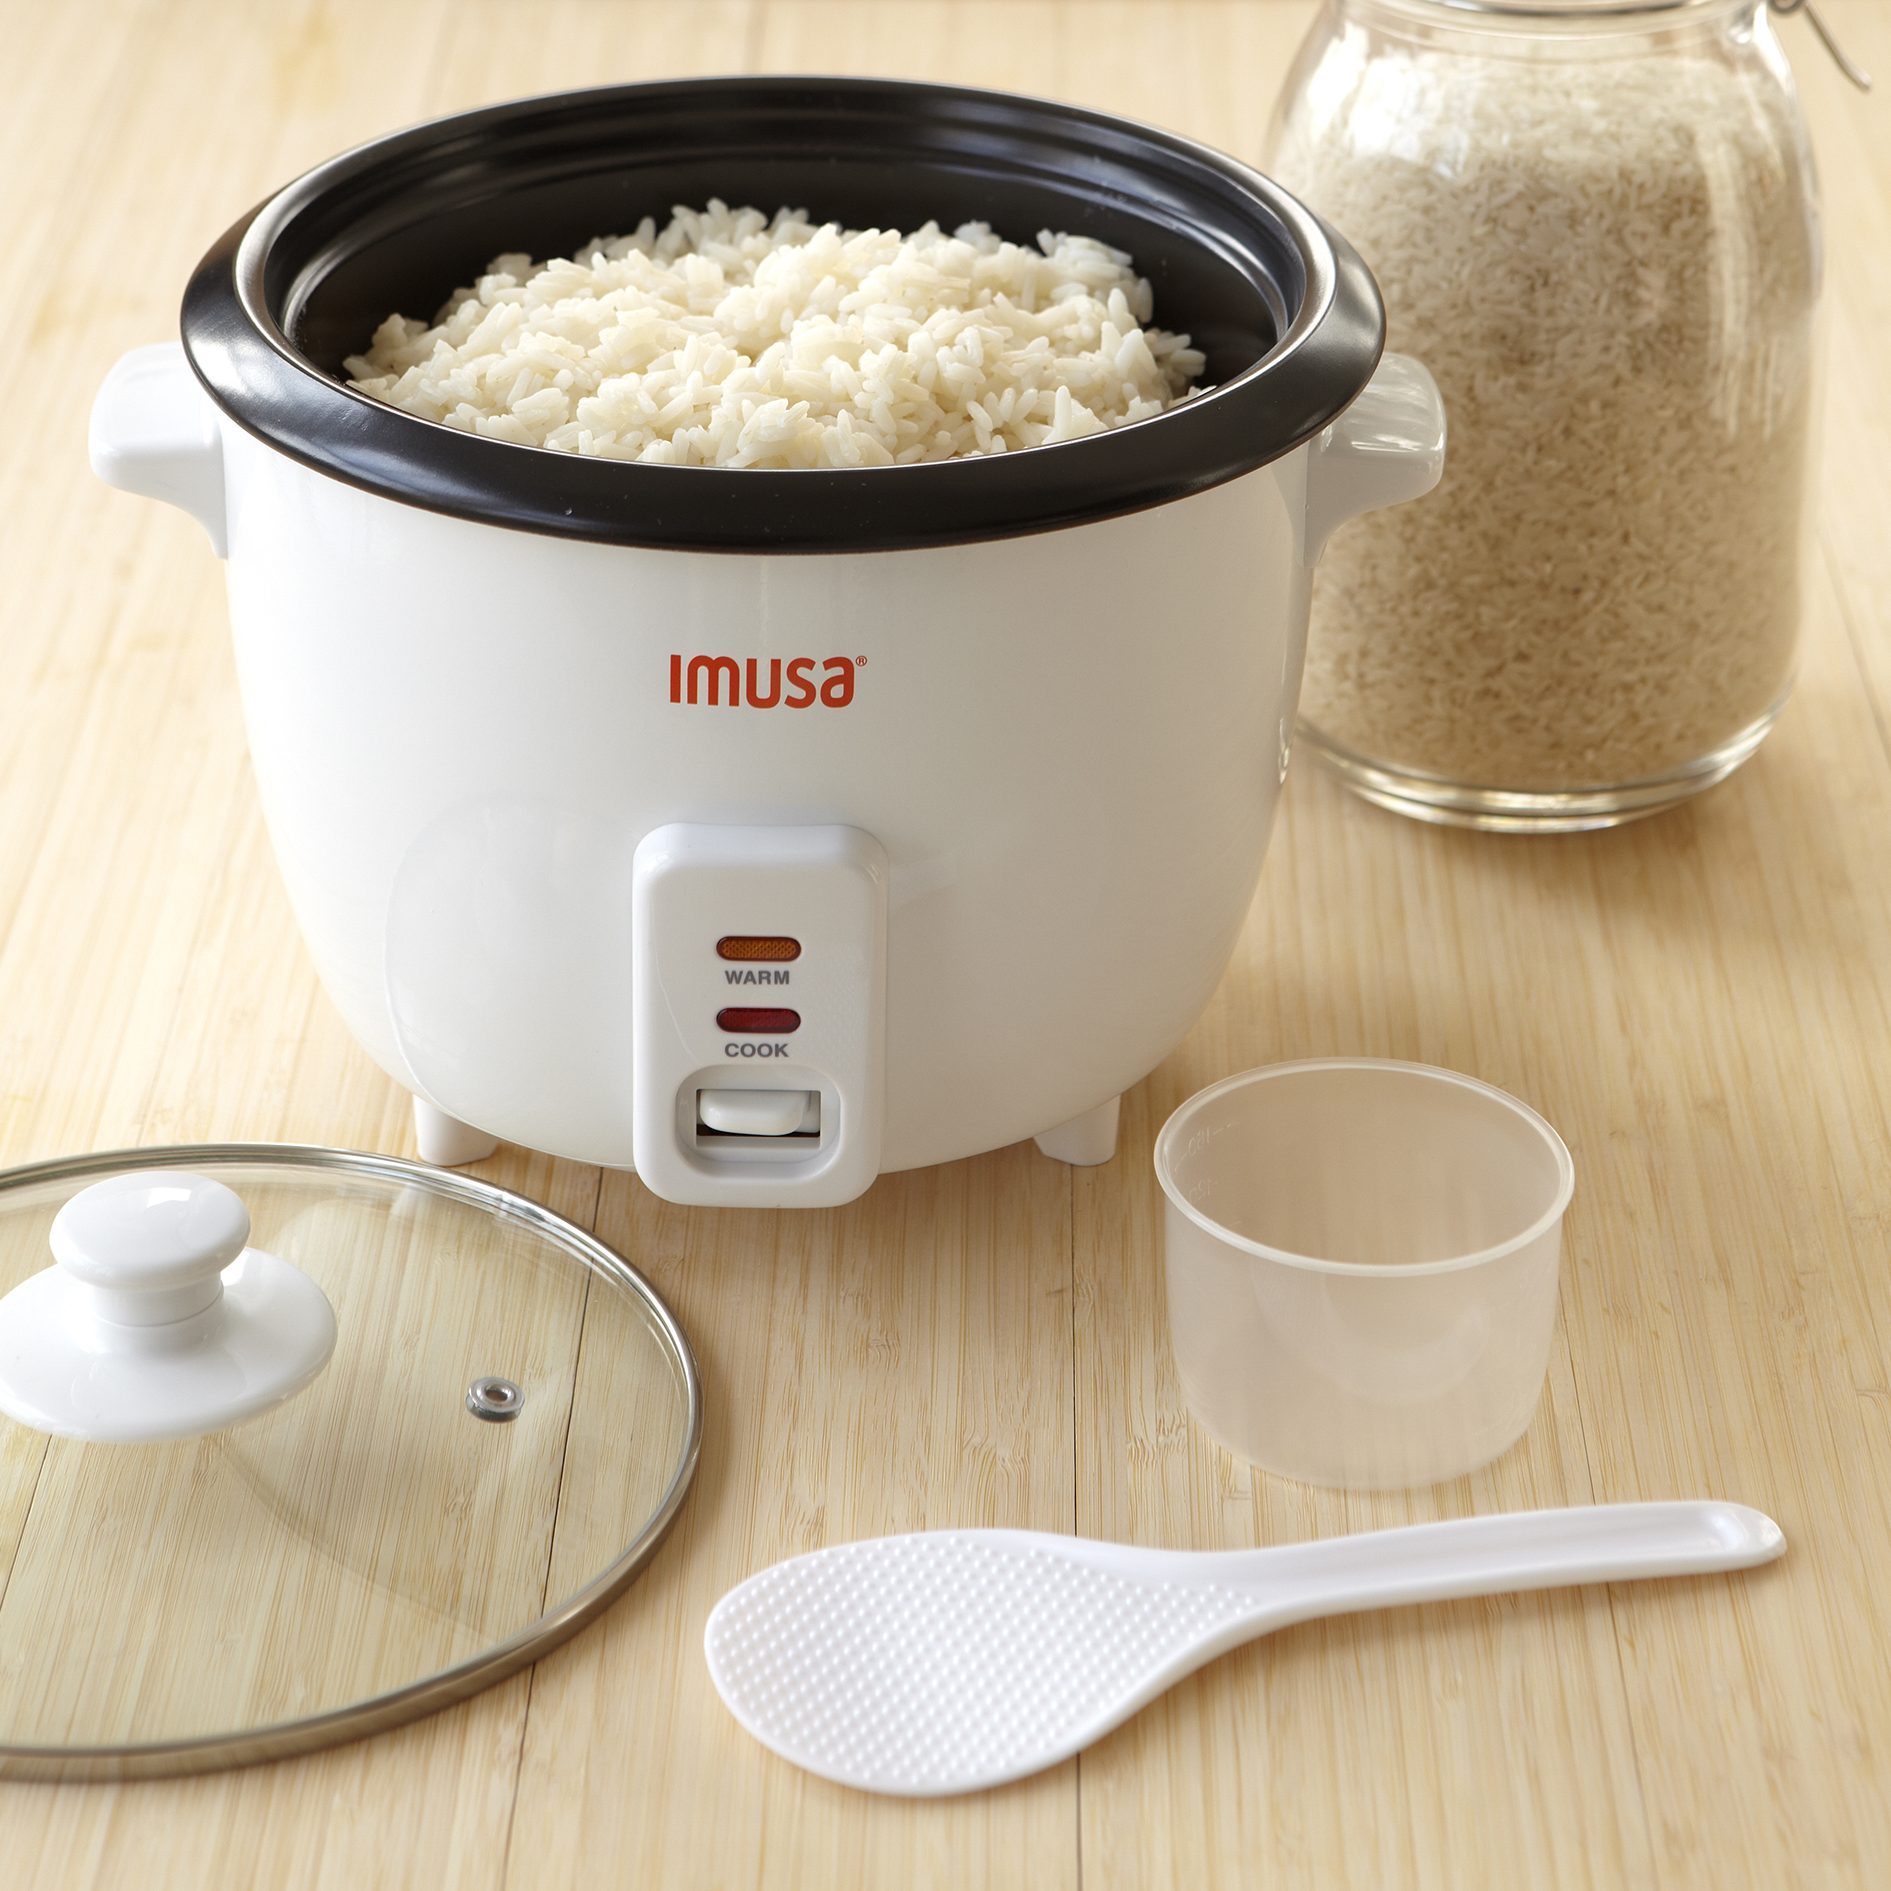 https://www.tasteofhome.com/wp-content/uploads/2022/03/imusa-electric-nonstick-rice-cooker-ecomm-via-amazon.com_-e1647005044523.jpg?fit=700%2C700